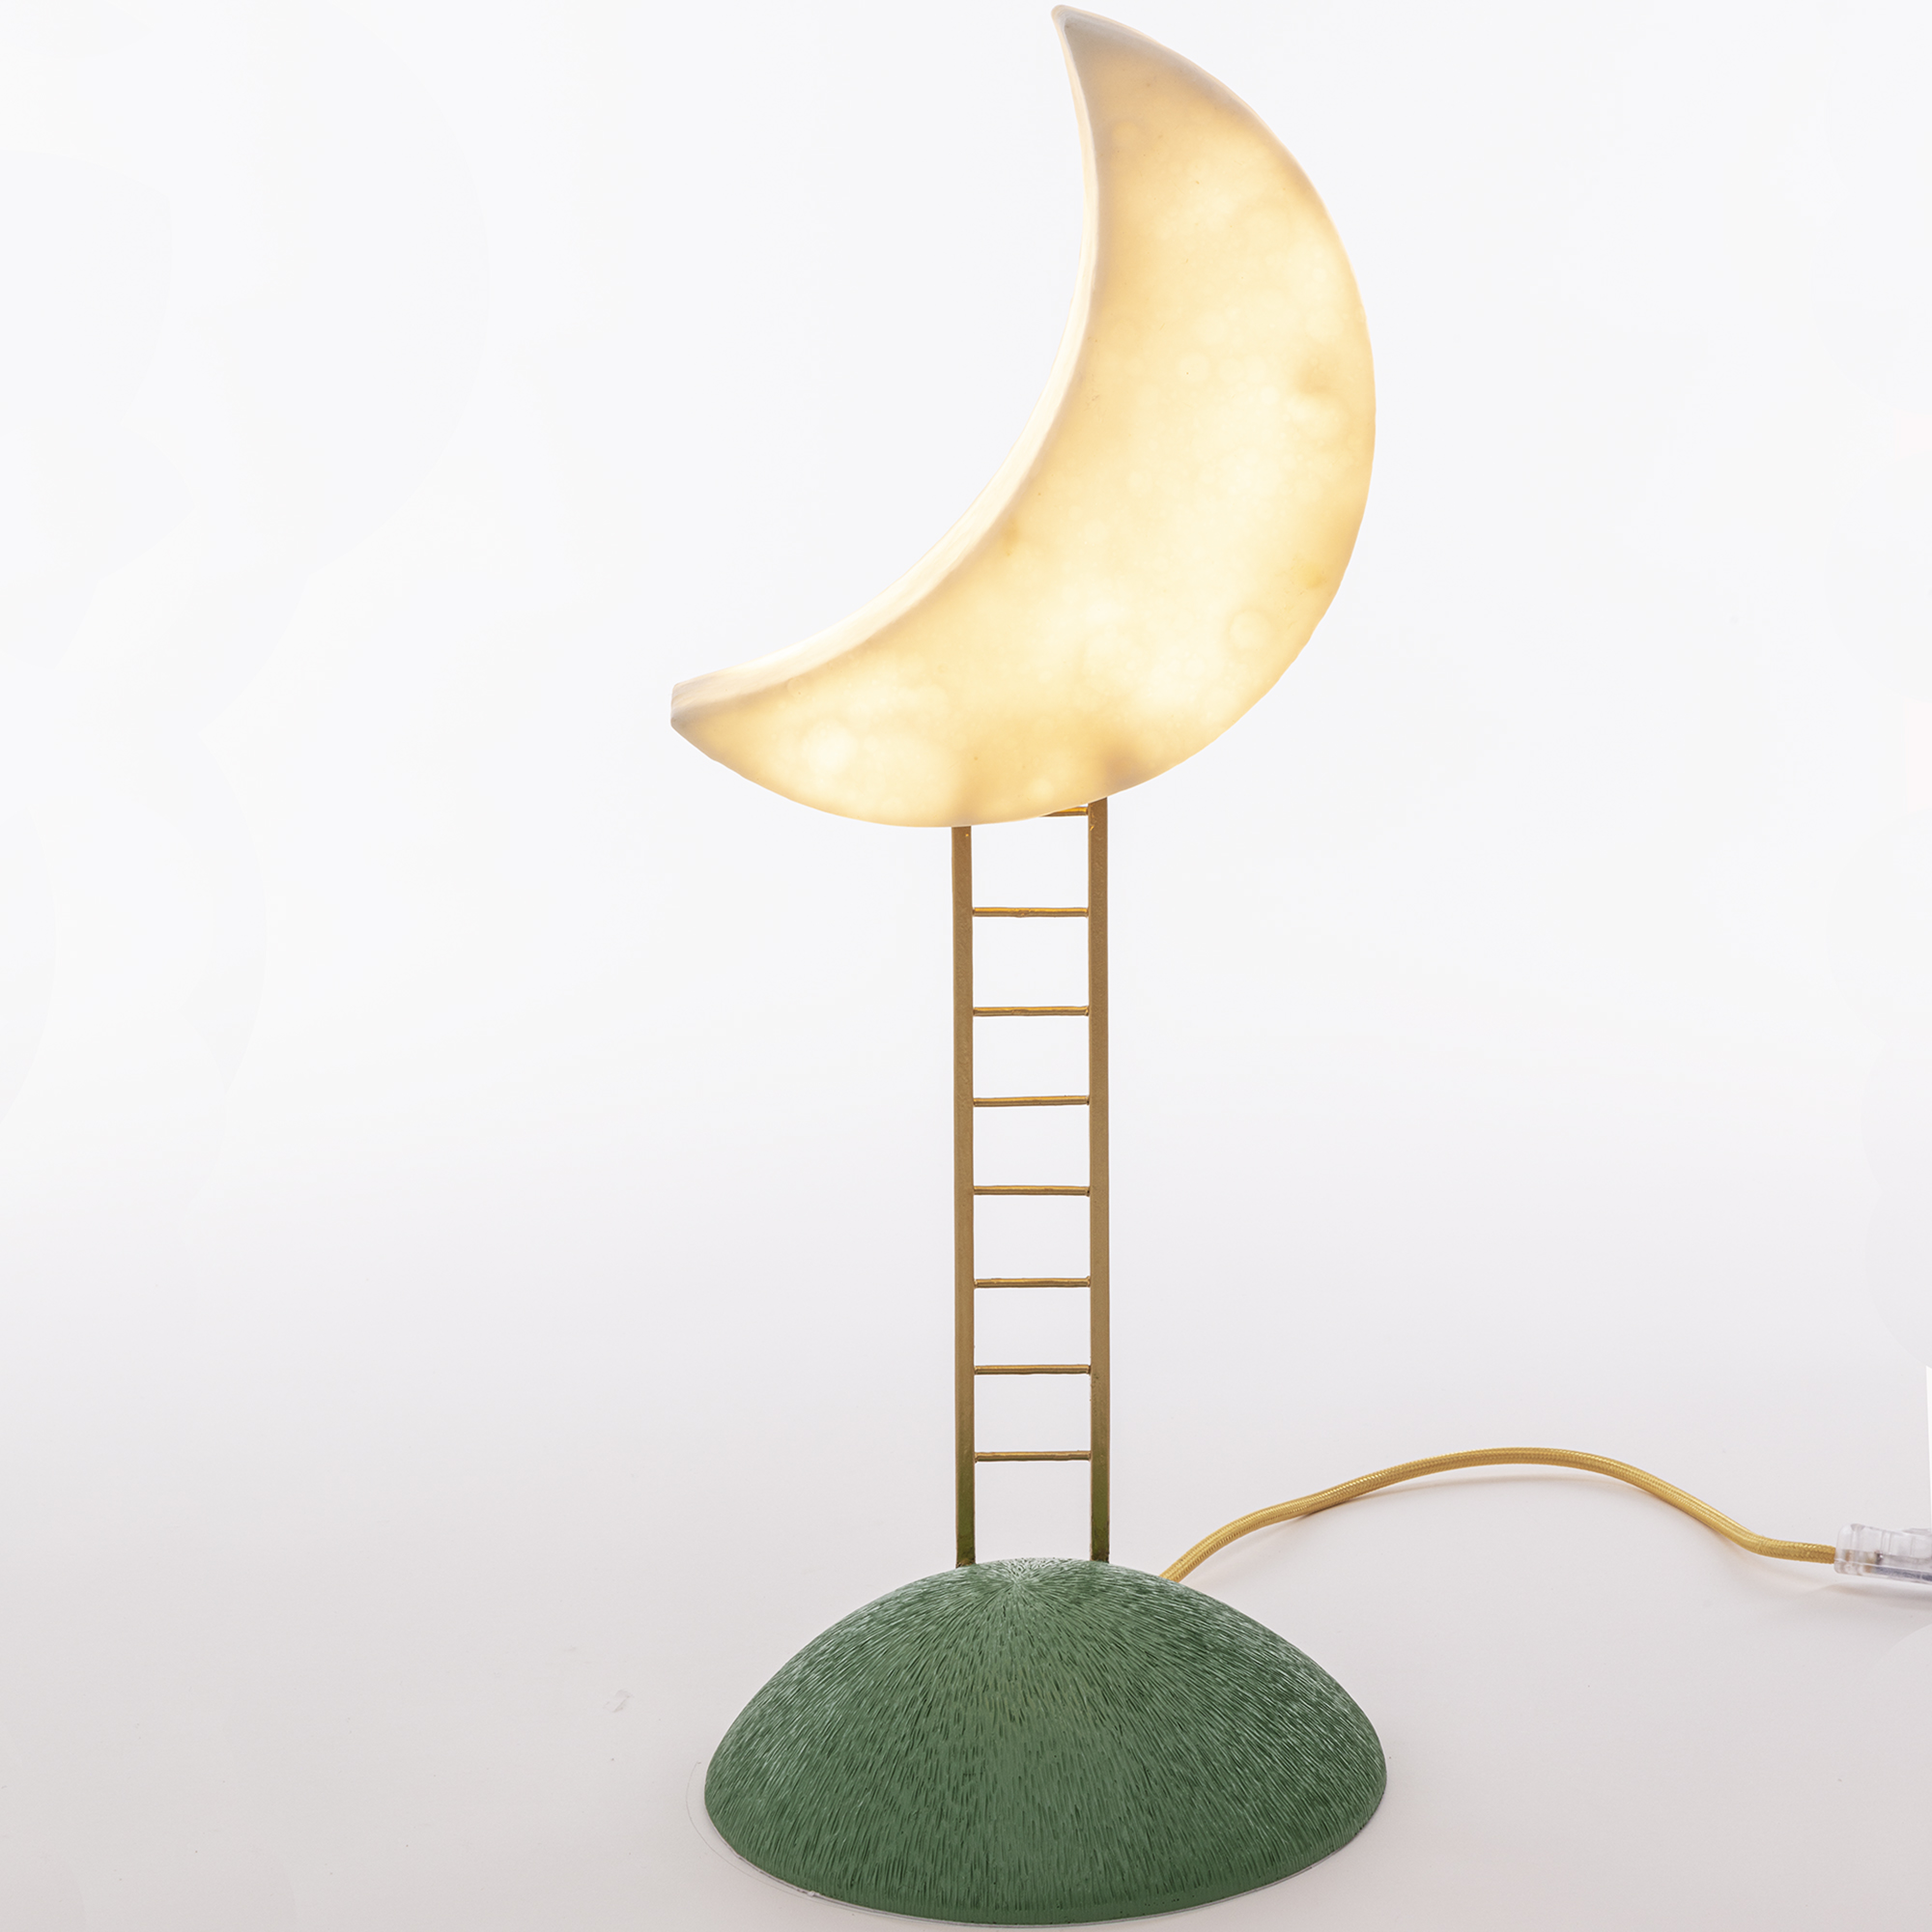 Seletti Tischleuchte My secret place – Moon lamp